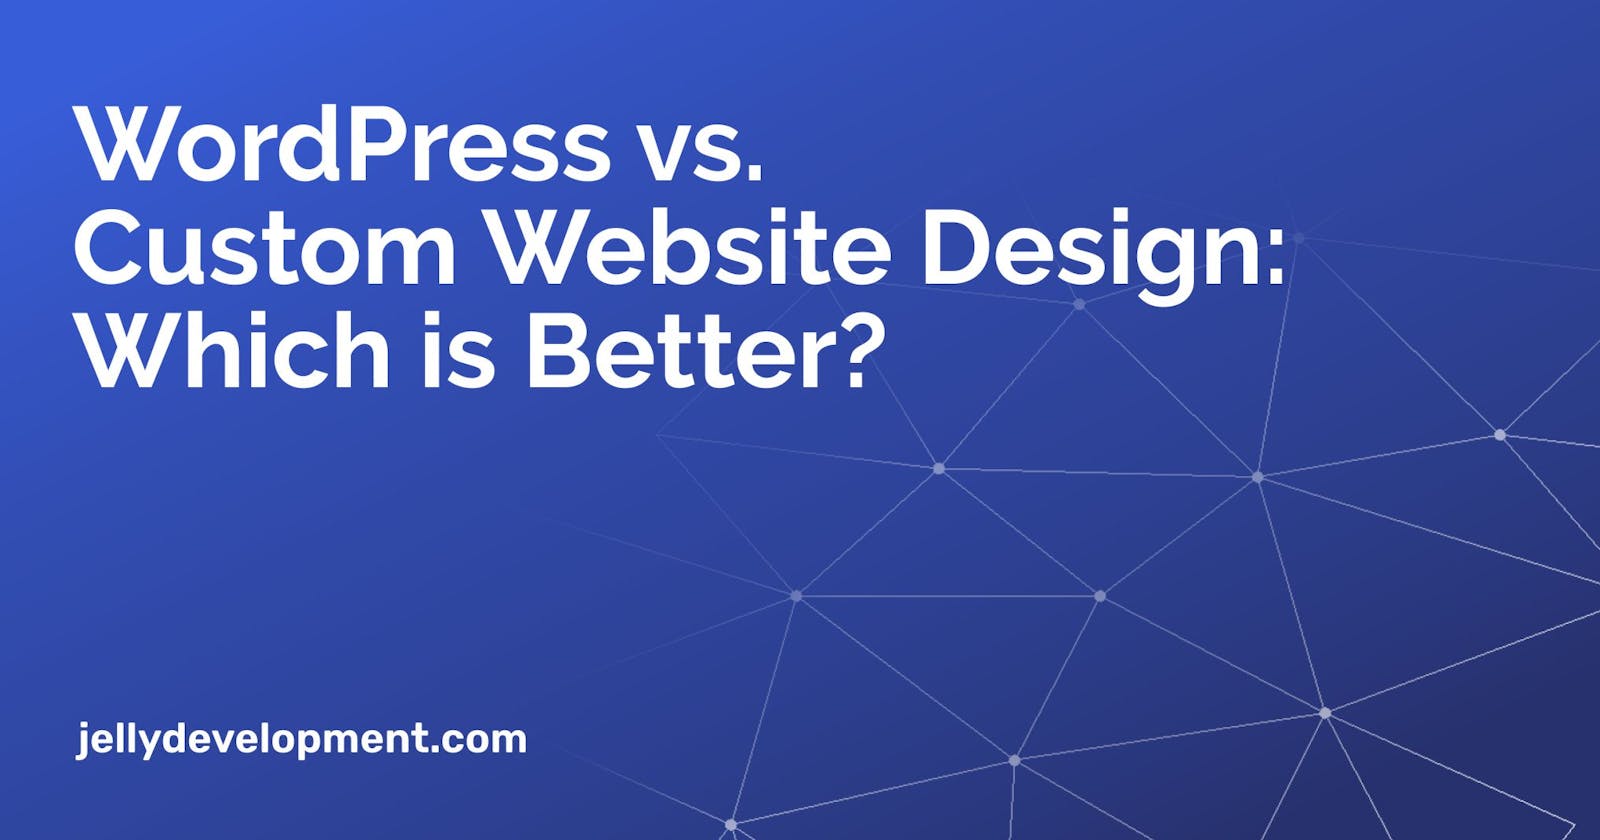 WordPress vs. Custom Website Design: Which is Better?